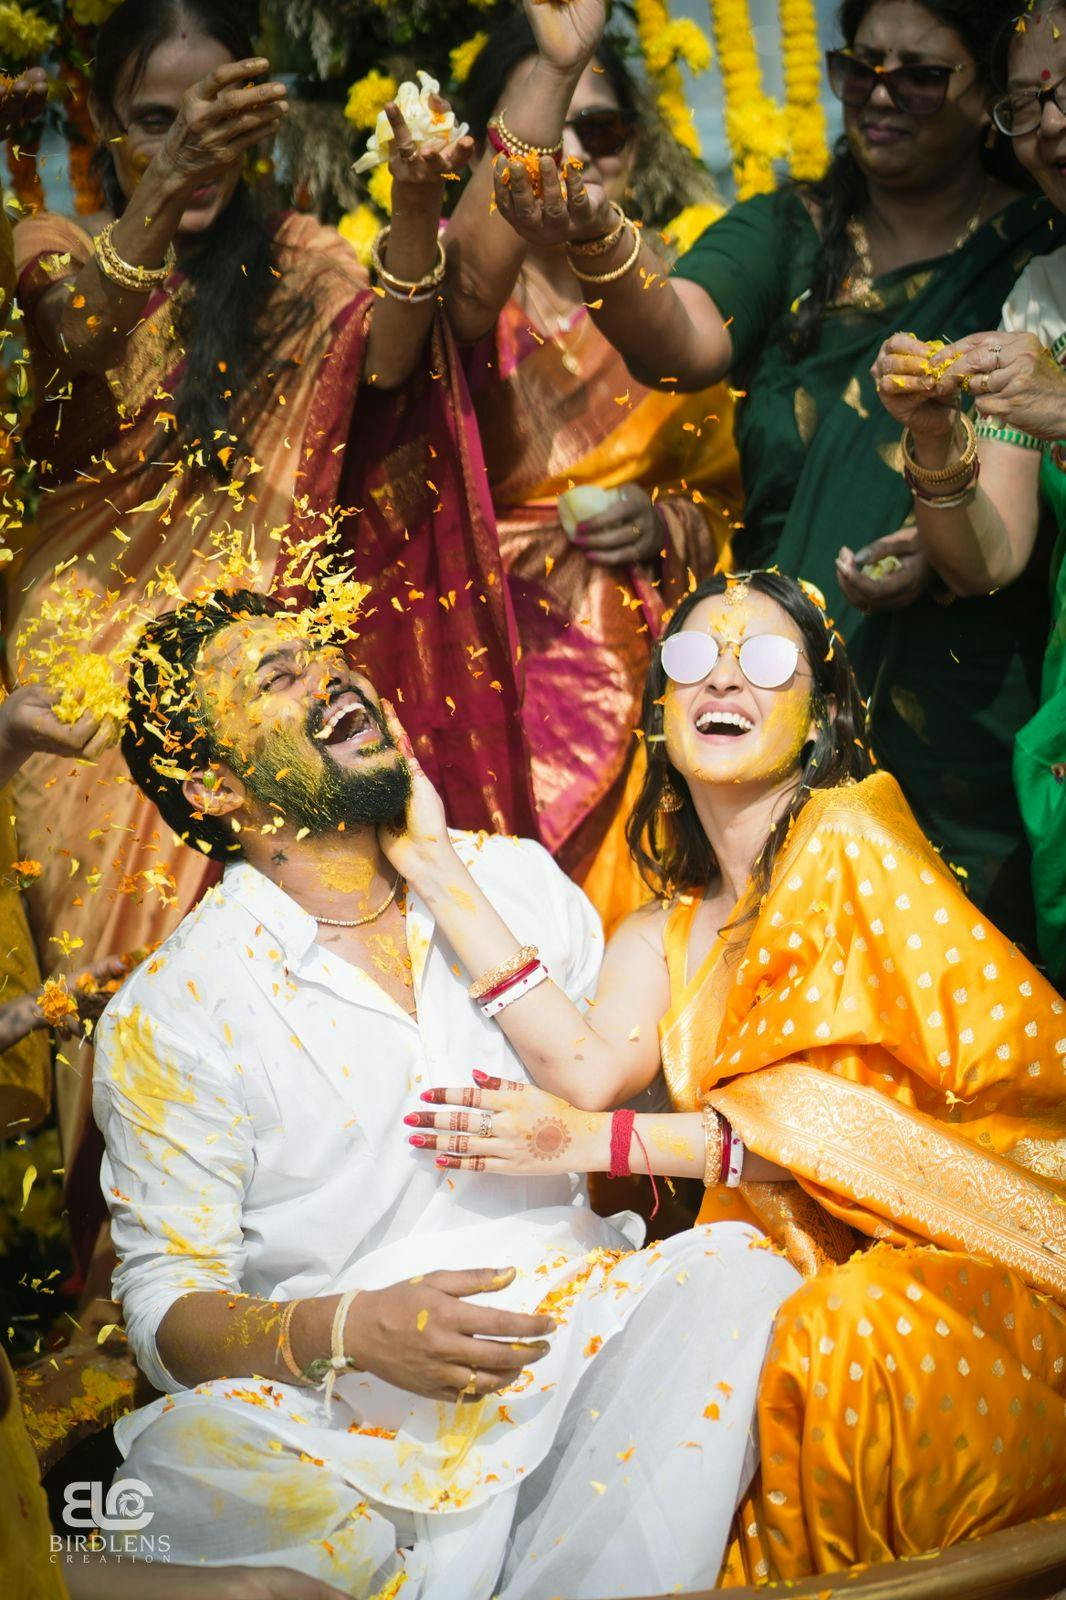 darshana banik and saurav das wedding photos captured by birdlens creation